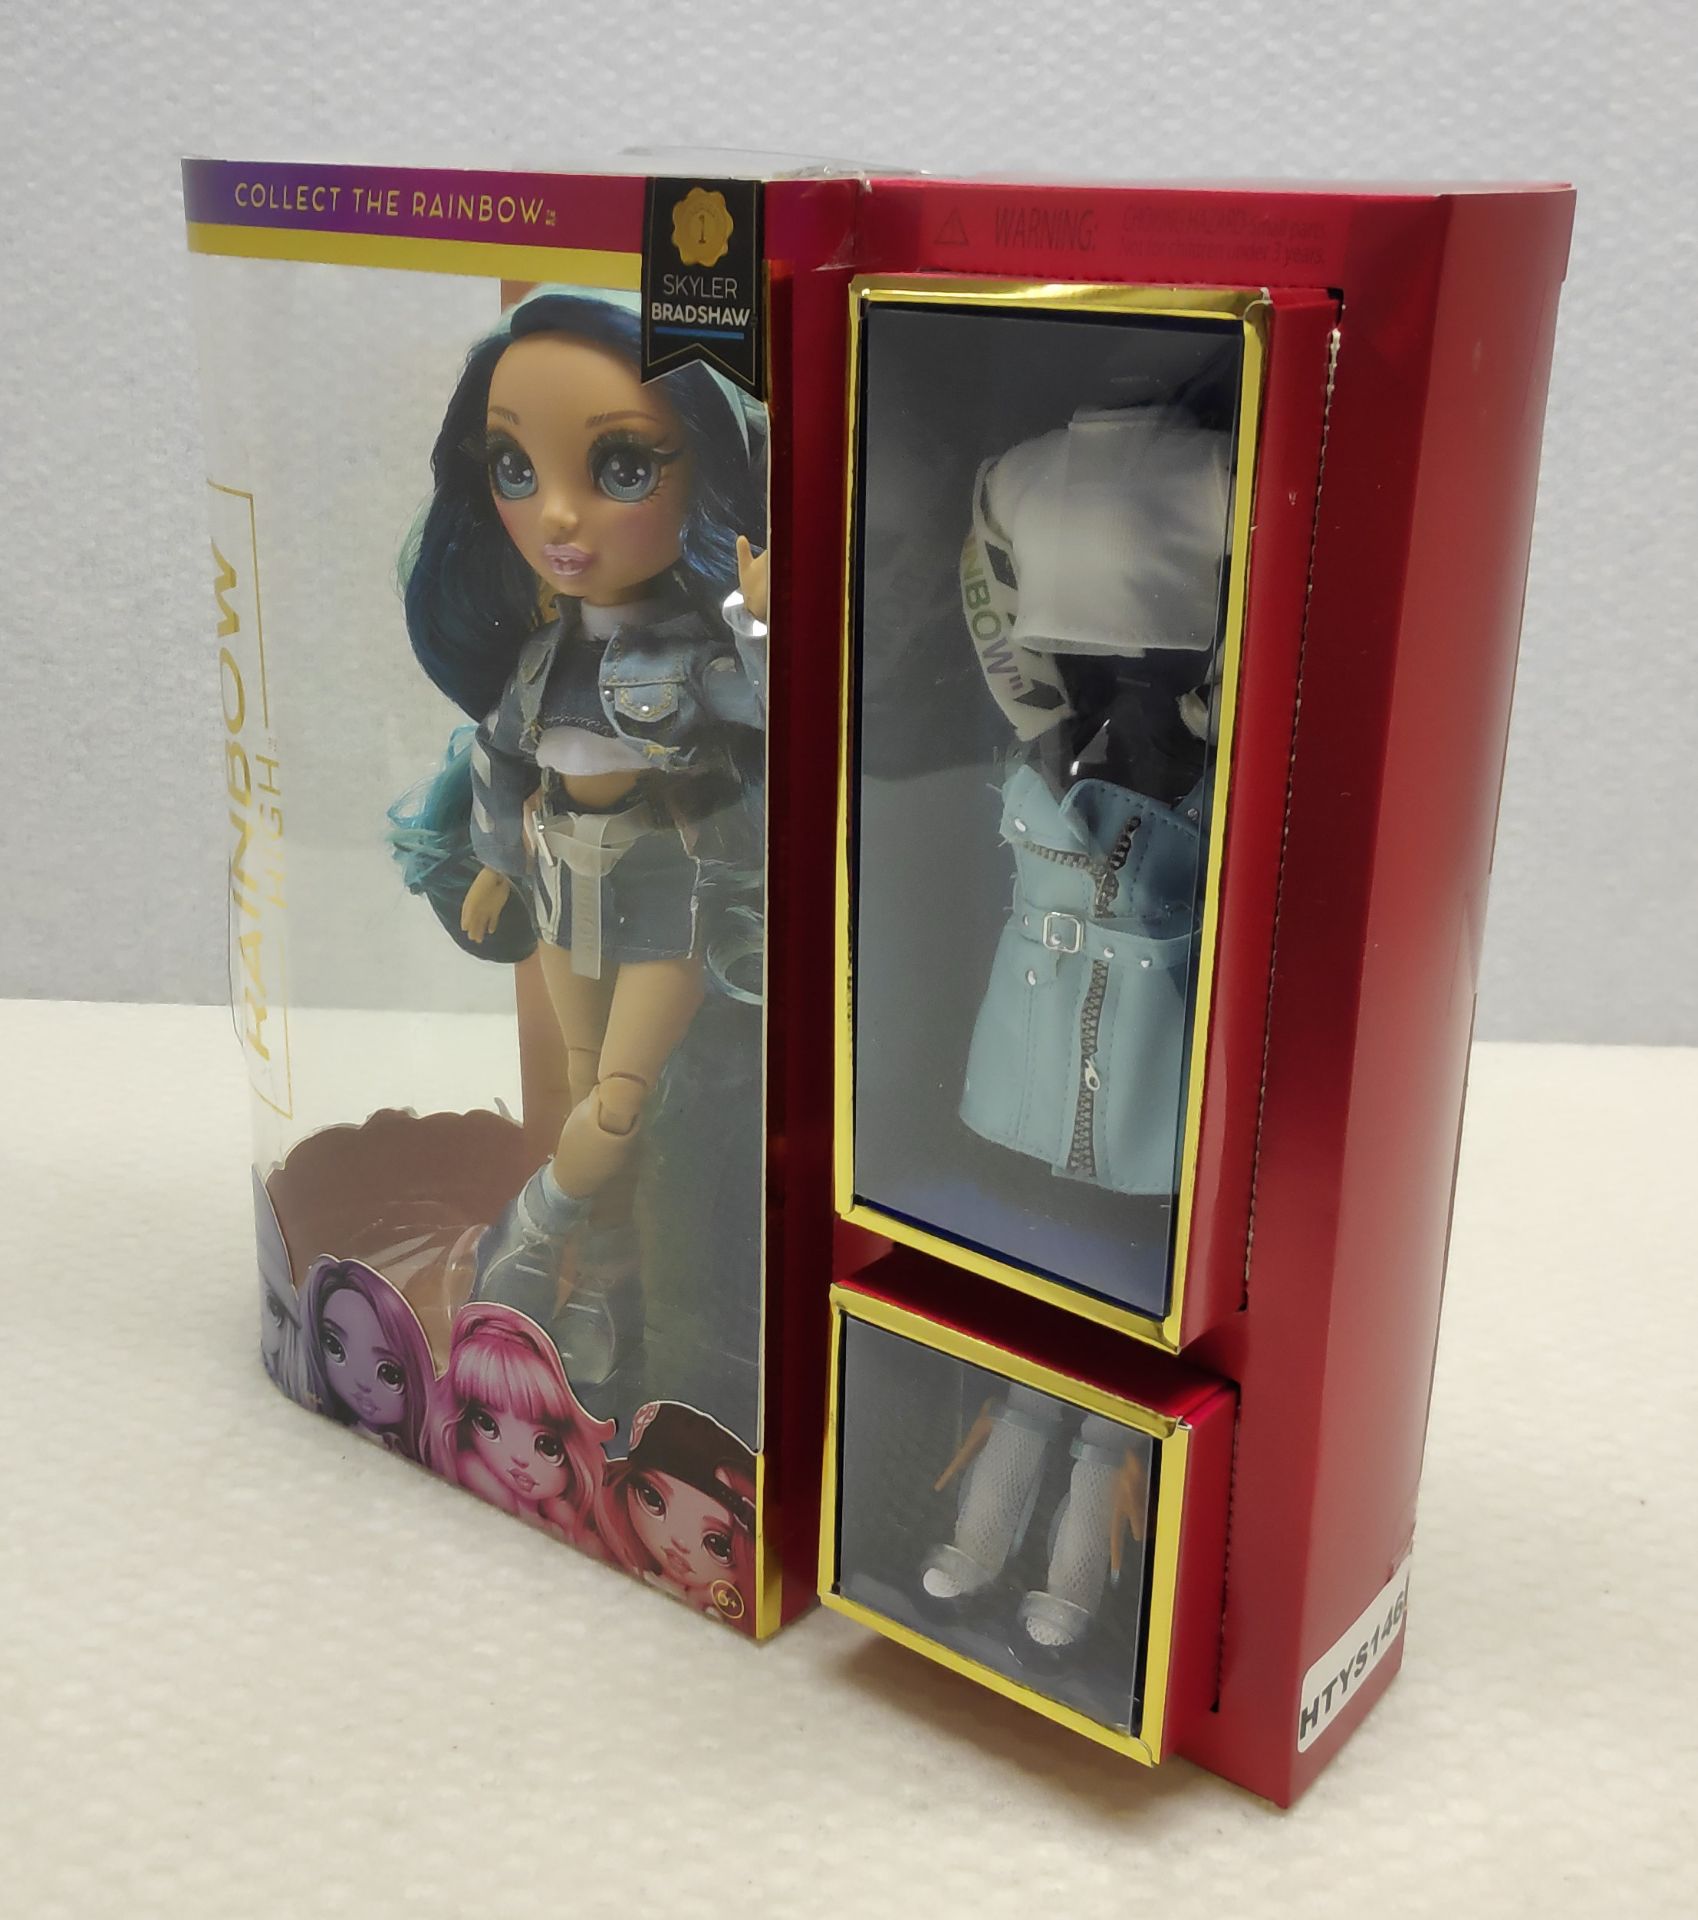 1 x Rainbow High Skyler Bradshaw Doll - New/Boxed - Image 2 of 8